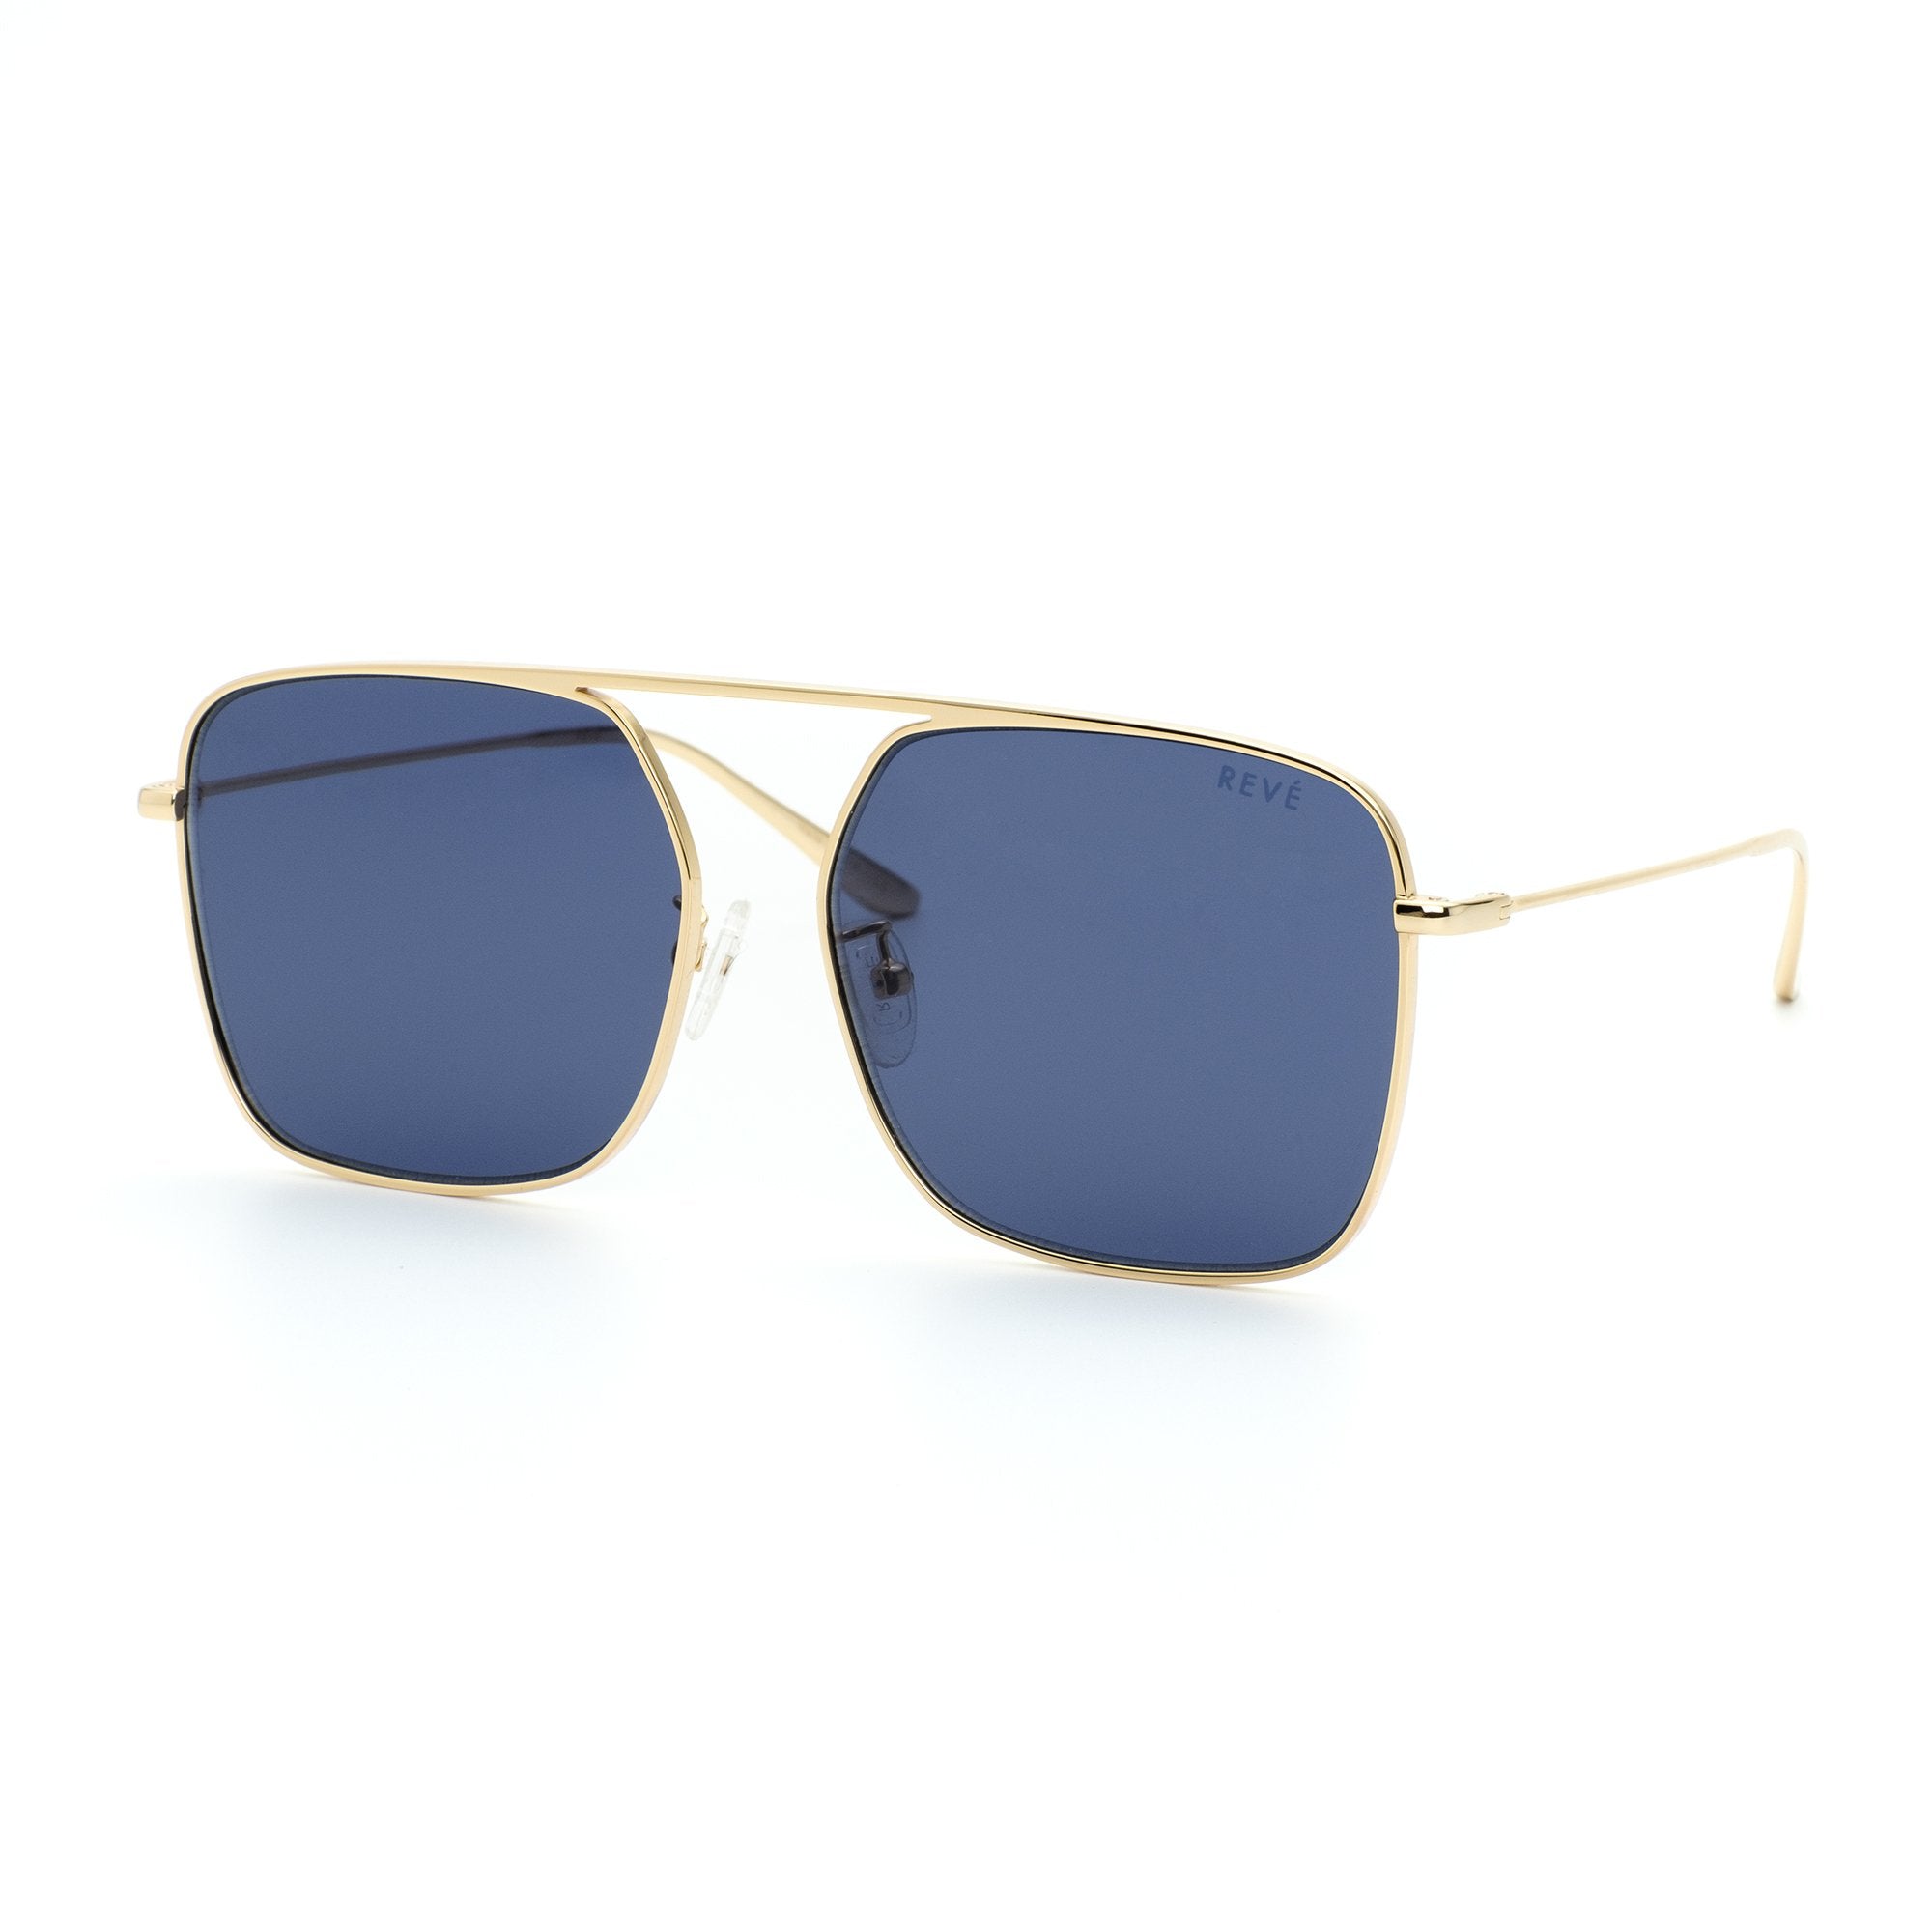 REVE by RENE BPM square aviator sunglasses in navy